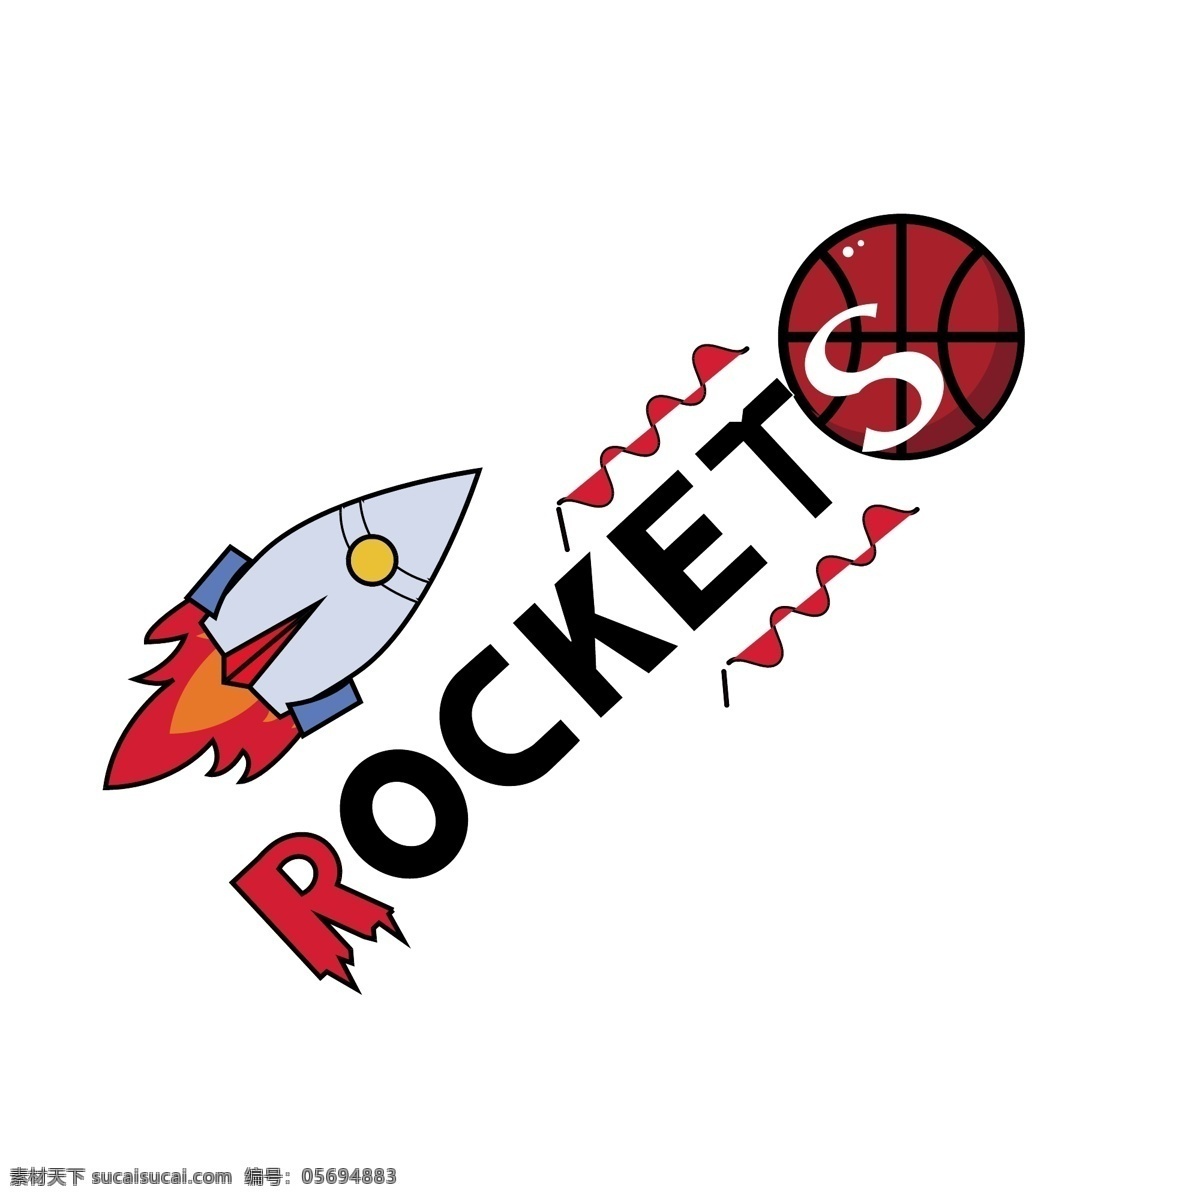 nba 火箭队 篮球 矢量 装饰 装饰图案 火箭